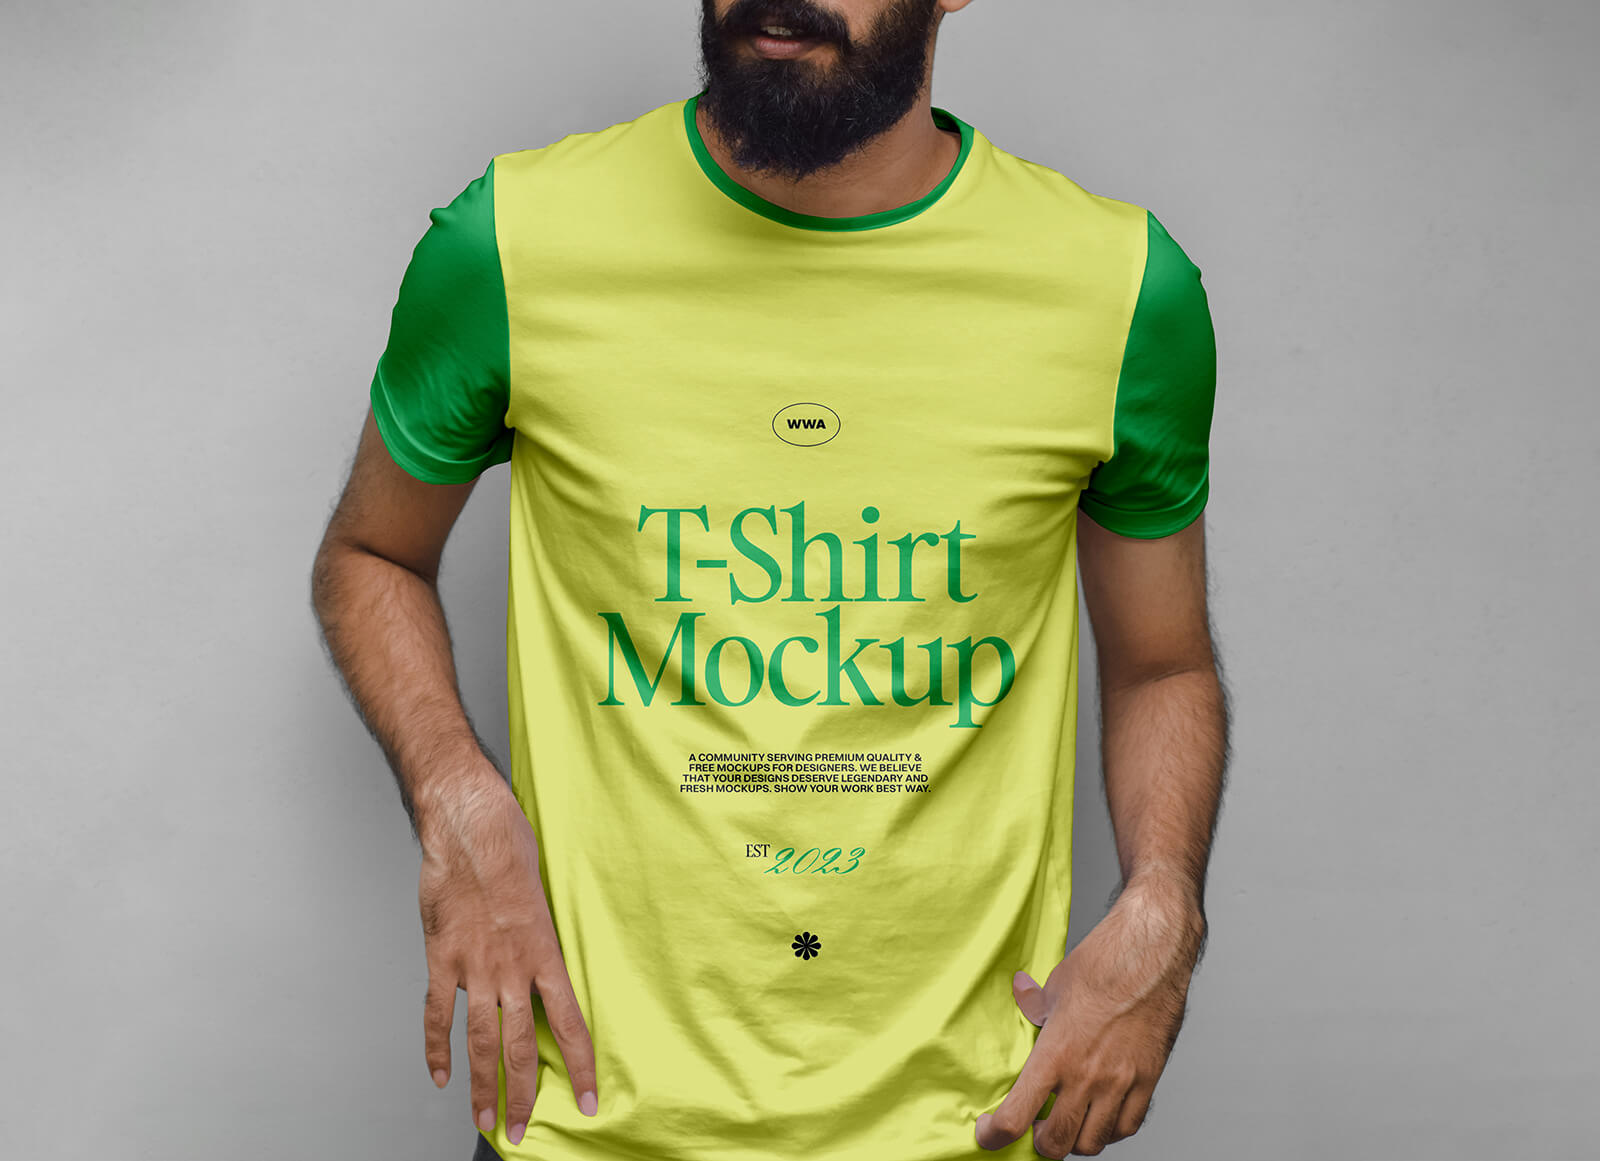 Beard Man portant un t-shirt Mockup